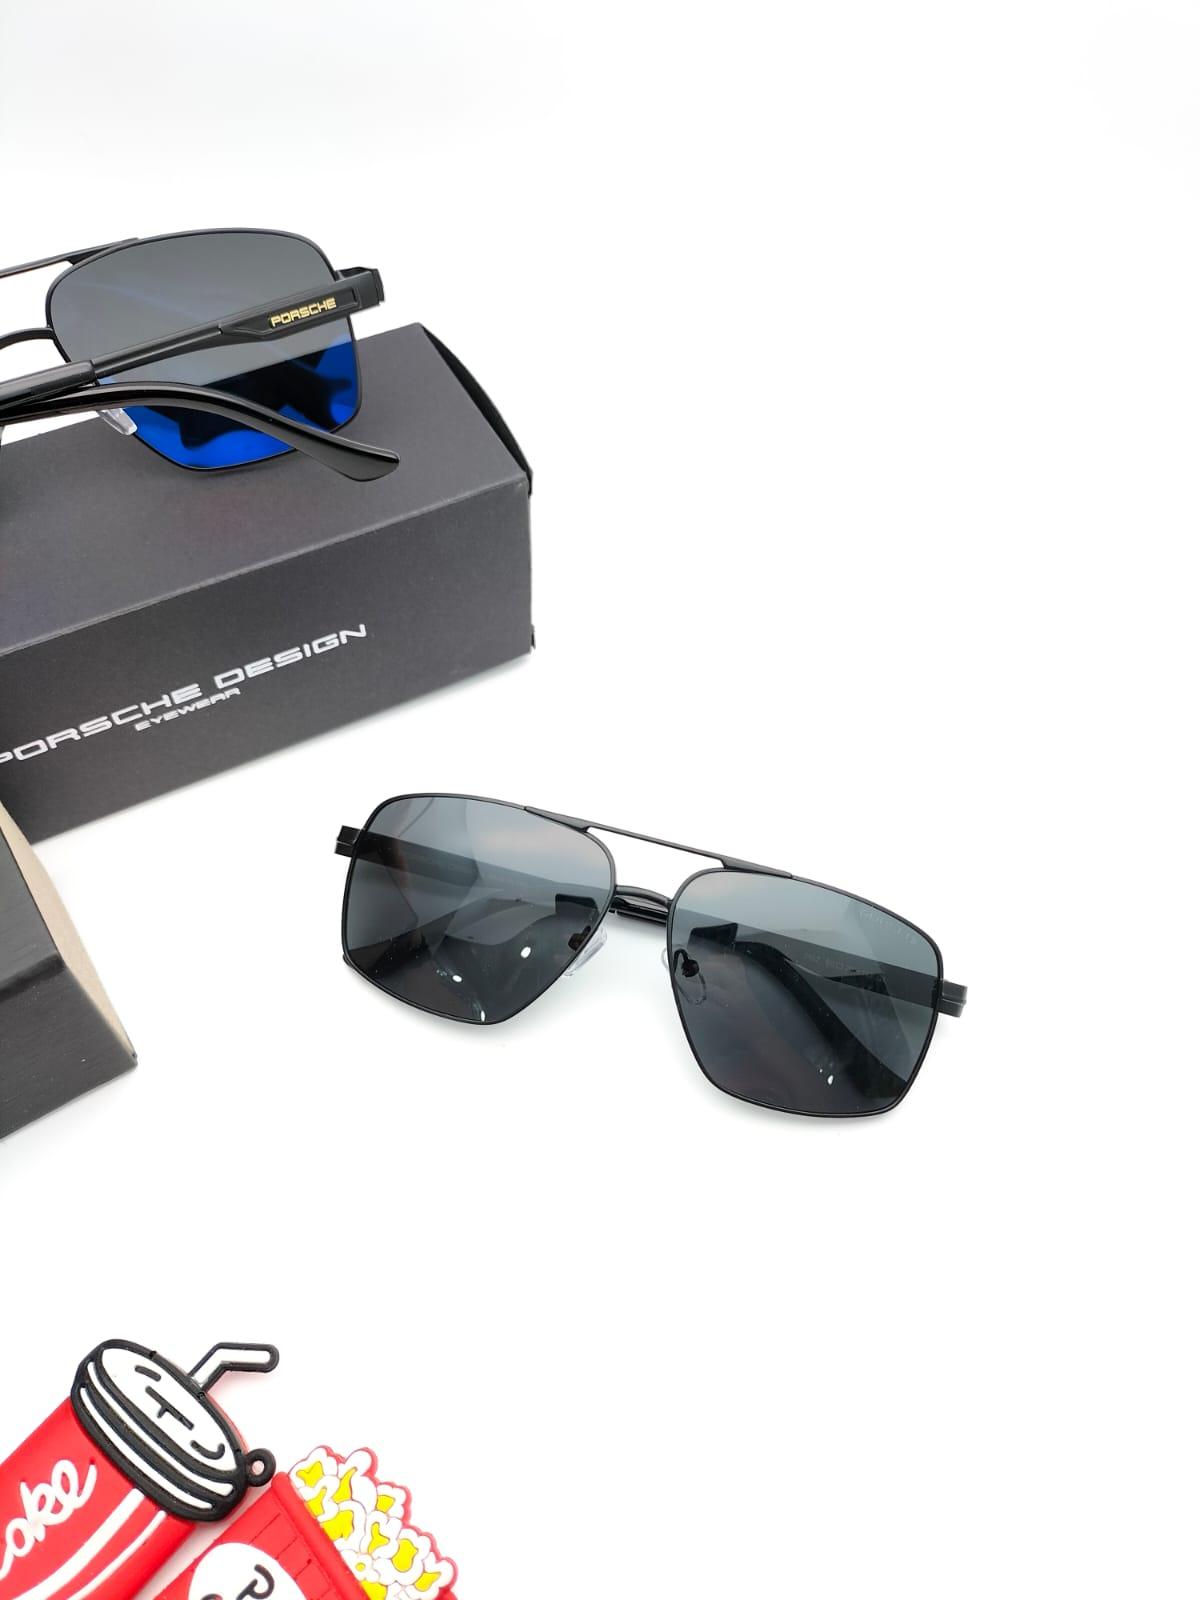 Porsche Design - Customized Prescription Sunglasses and Spectacles